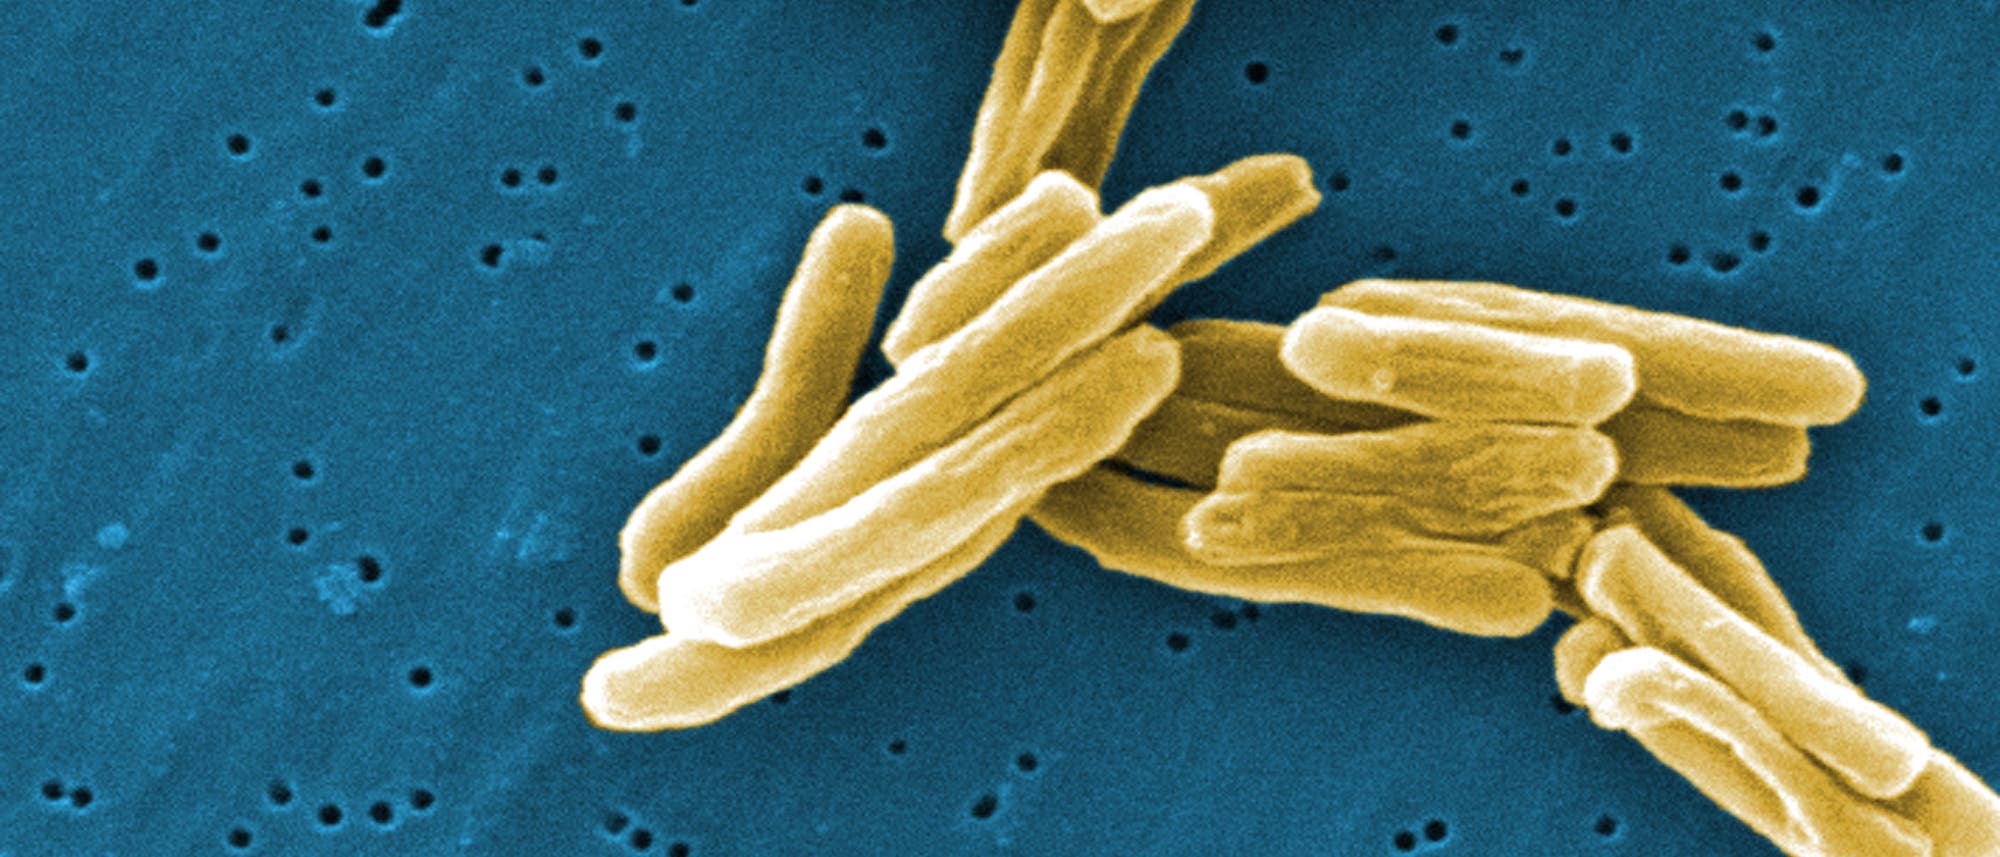 Tuberkulosebakterien